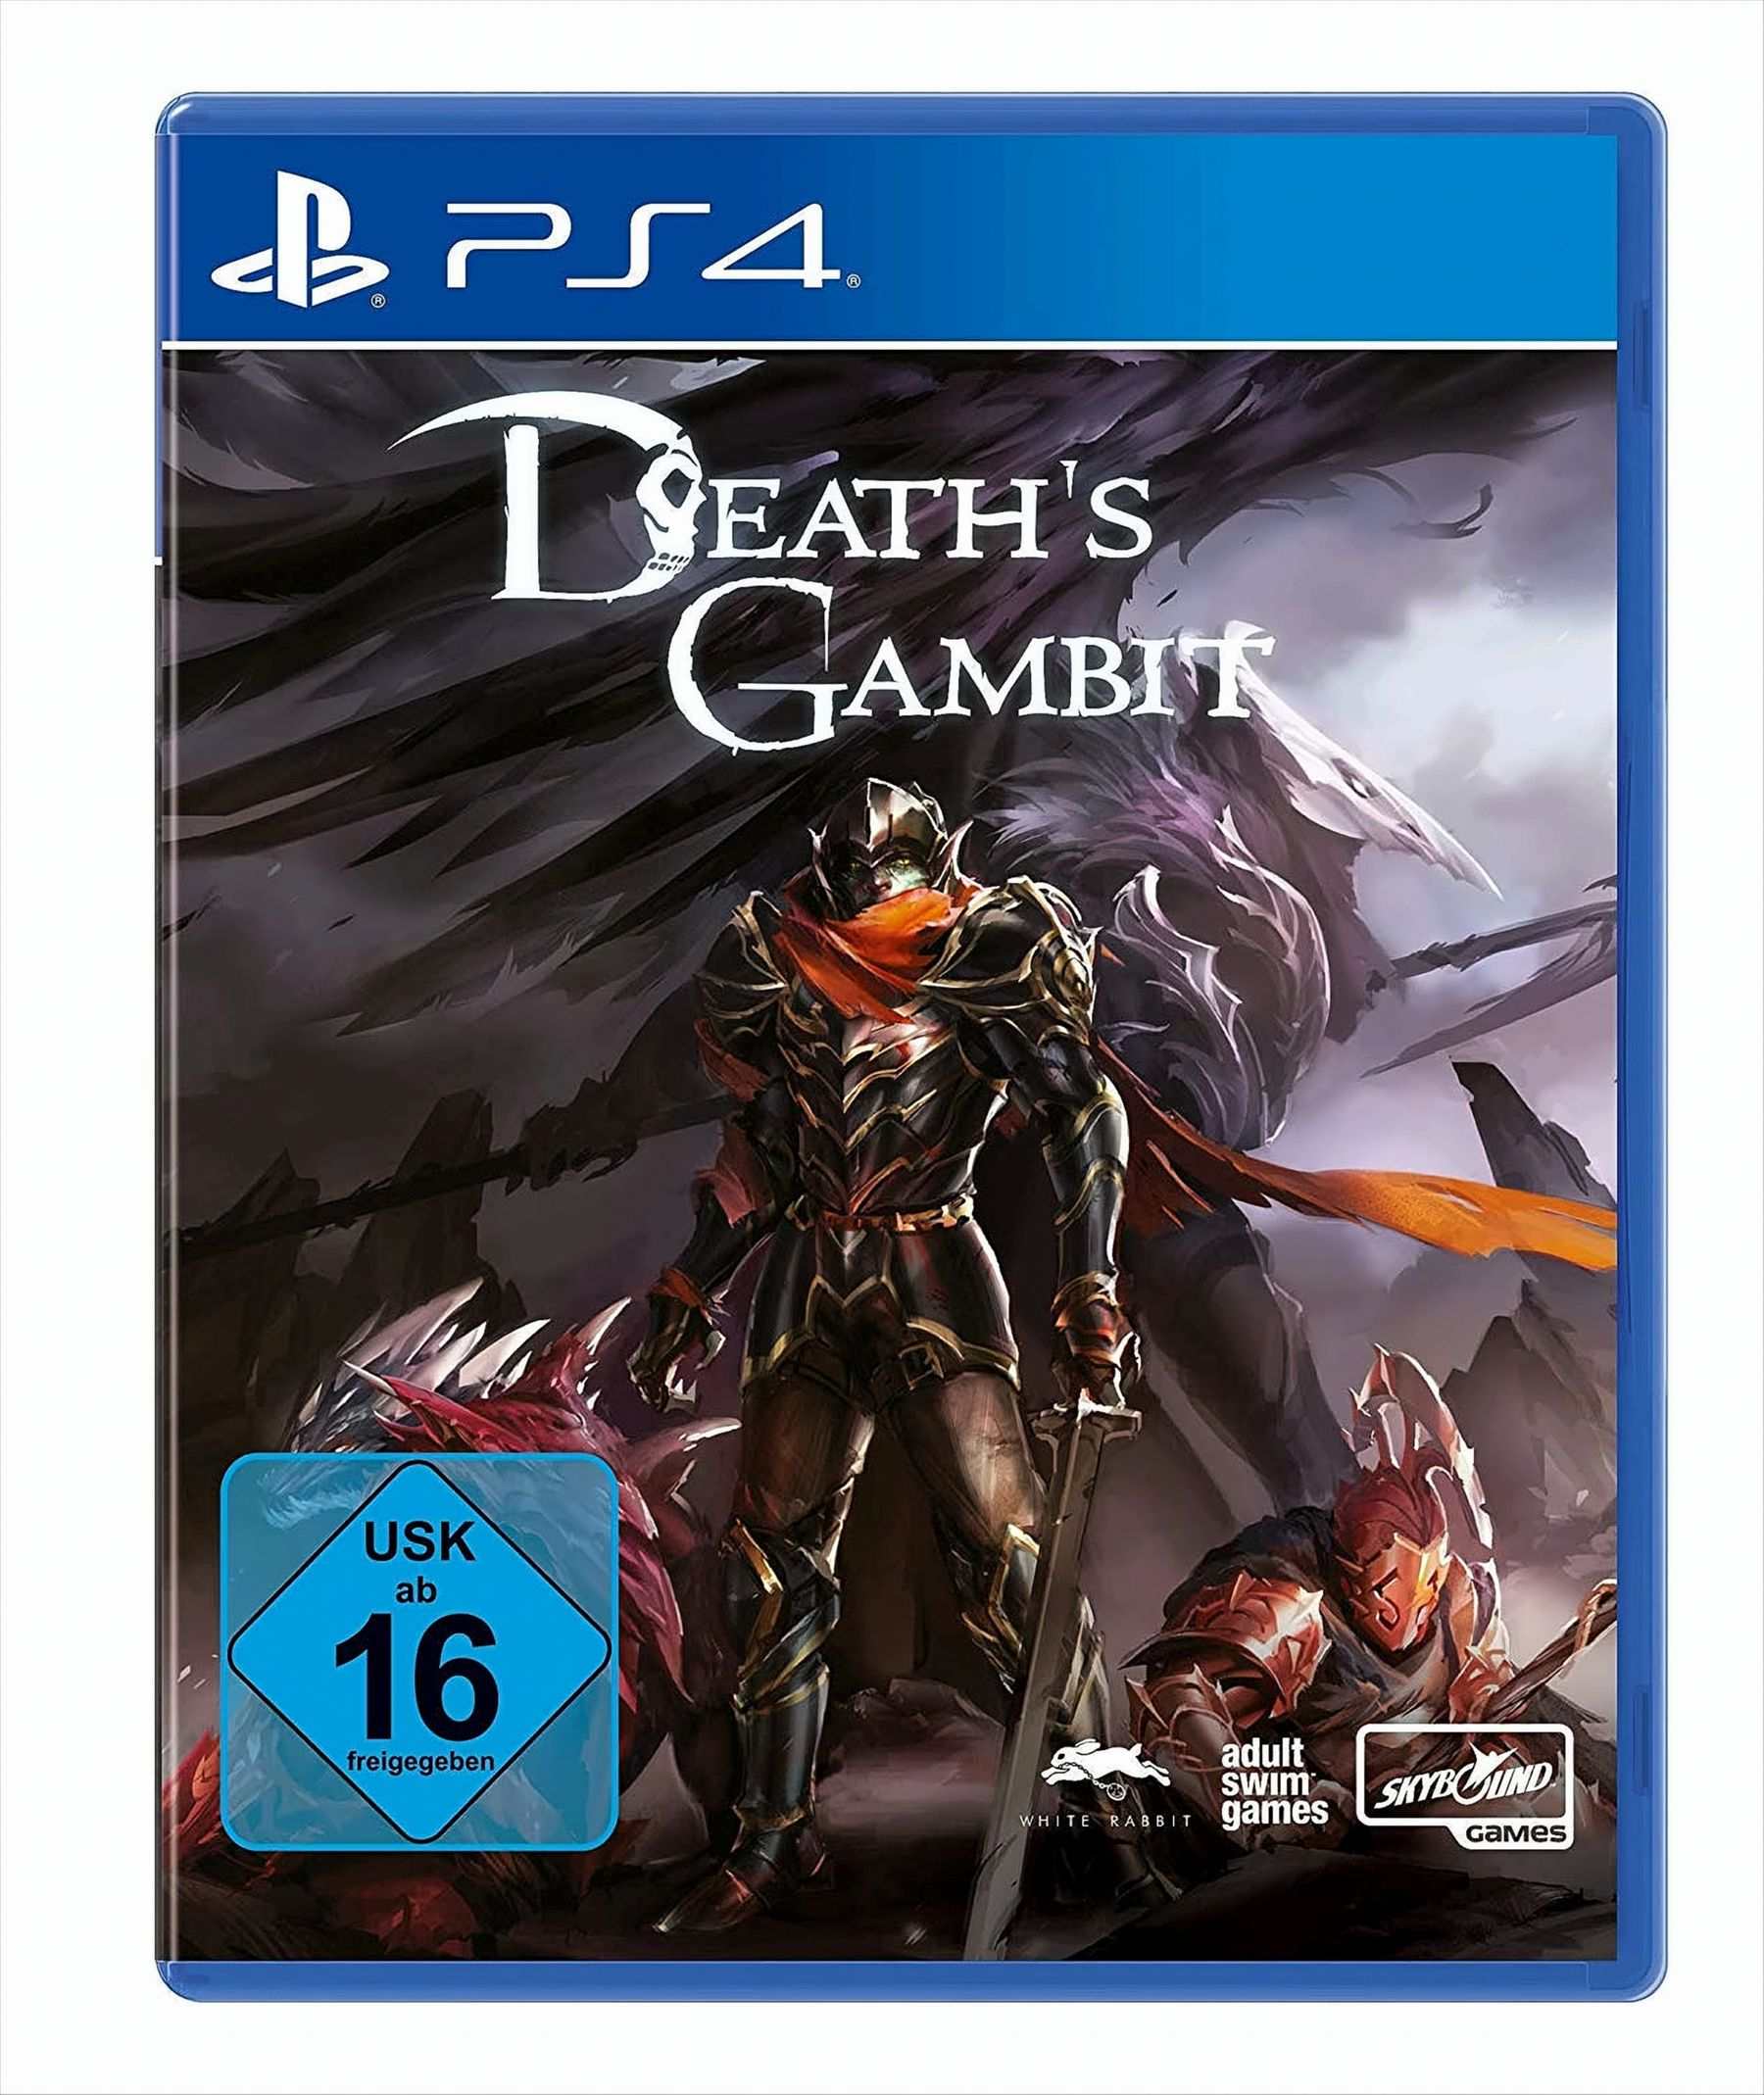 PS-4 Gambit - [PlayStation 4] Death